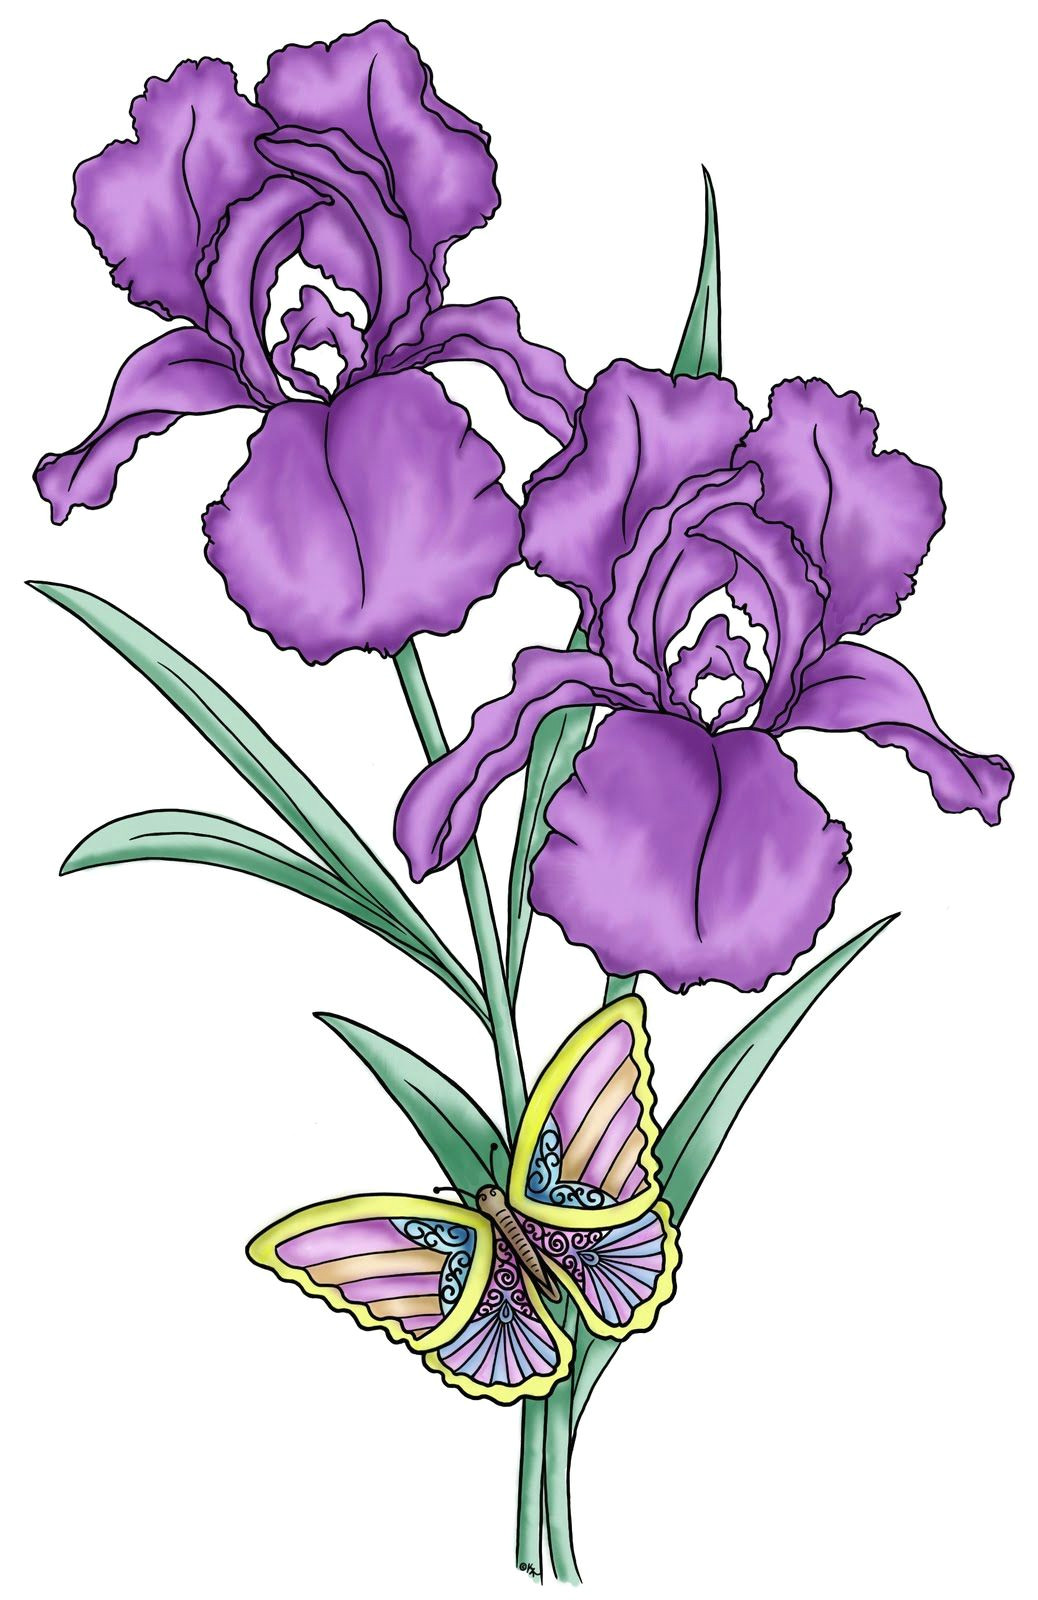 Drawing Flowers On Cards Flower Drawings Google Search Flowers Pinterest Flowers